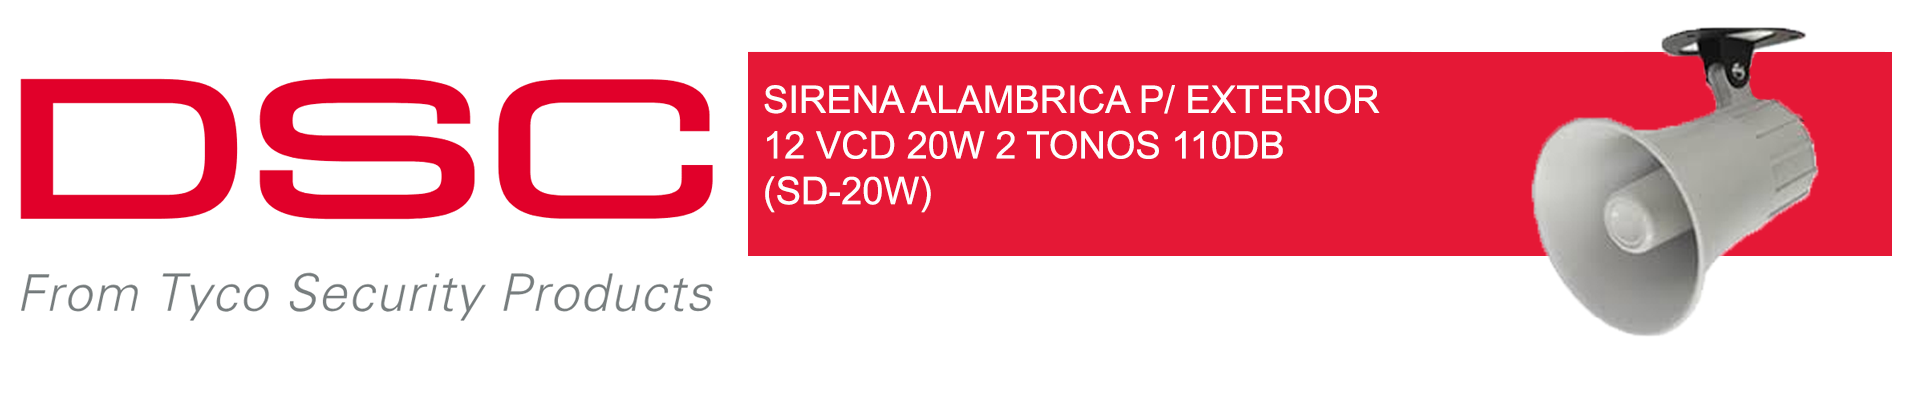 BANNER DSC SD20W | Sirena para exteriores 20W